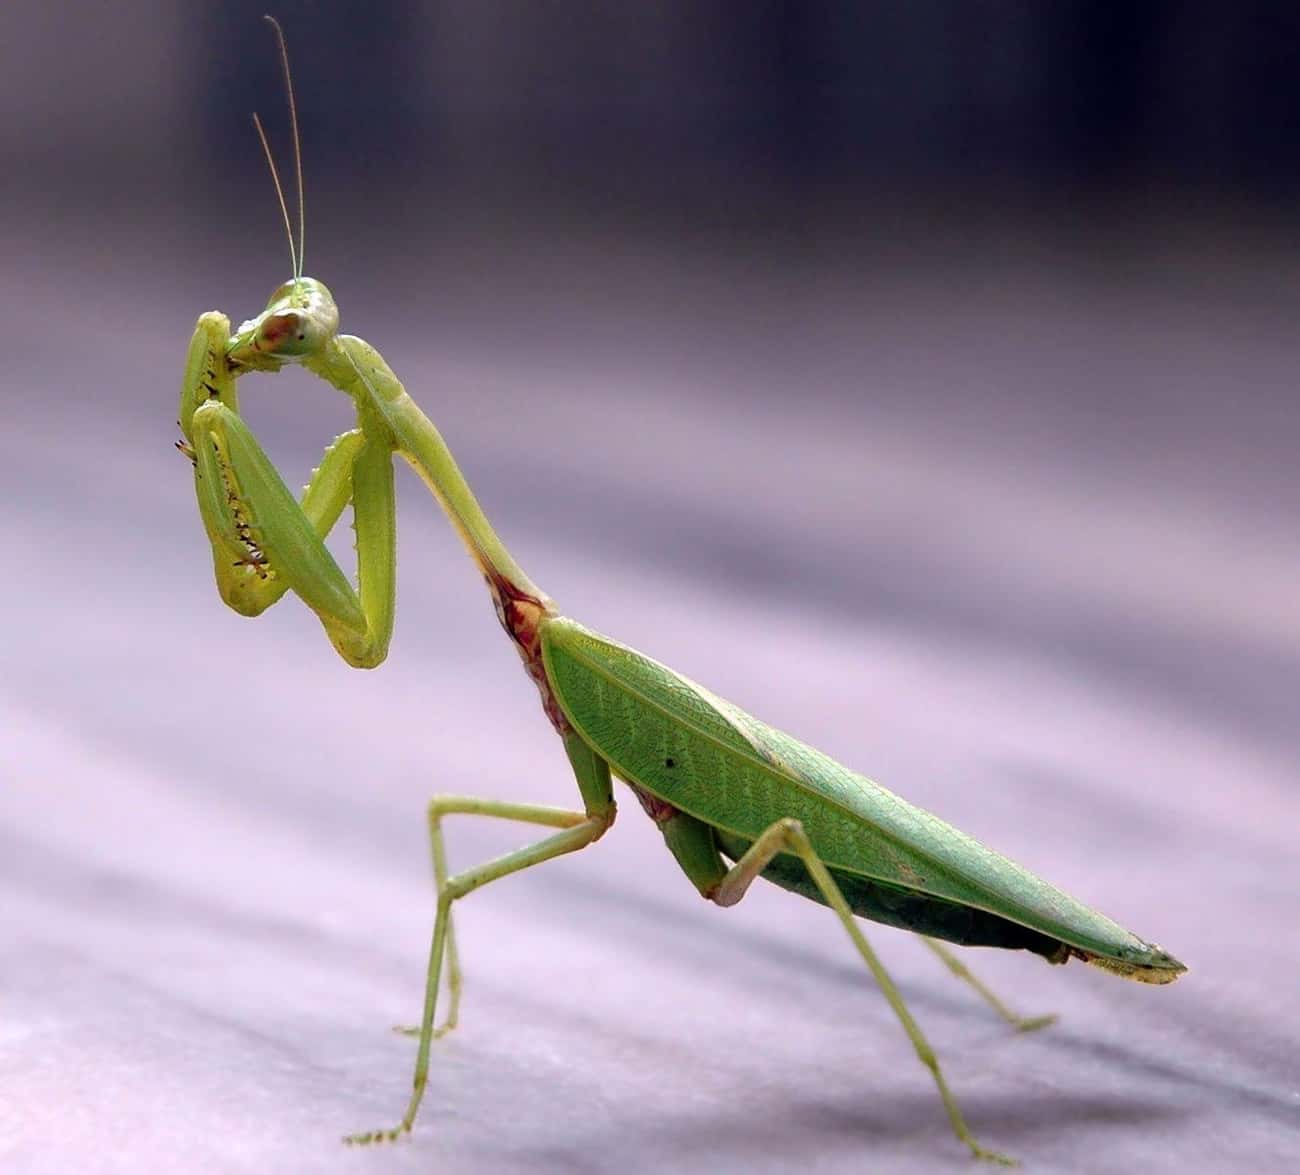 A Female Praying Mantis Bites Her Mate's Head Off